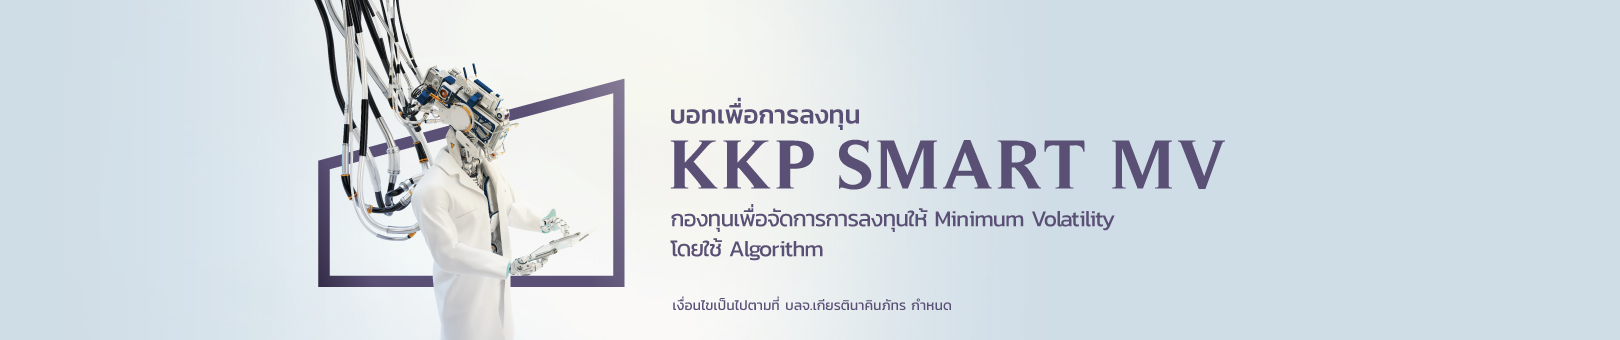 KKP-Smart-MV_1620x340